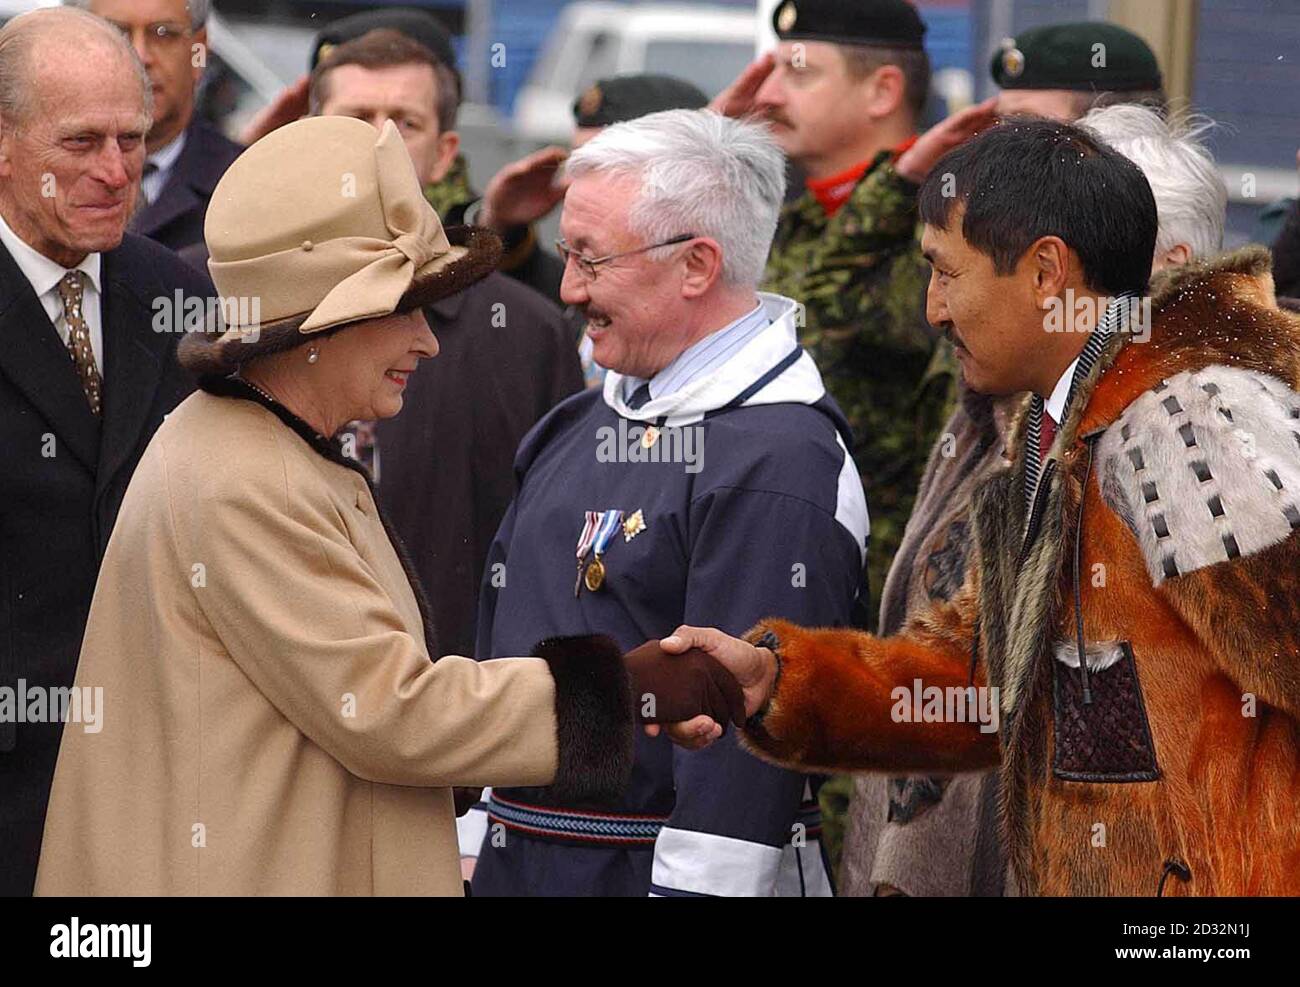 Queen Elizabeth II arrives in Iqaluit, Nunavut, Canada, greeted by Paul Okalik the Government Leader of Nunavut. Stock Photo